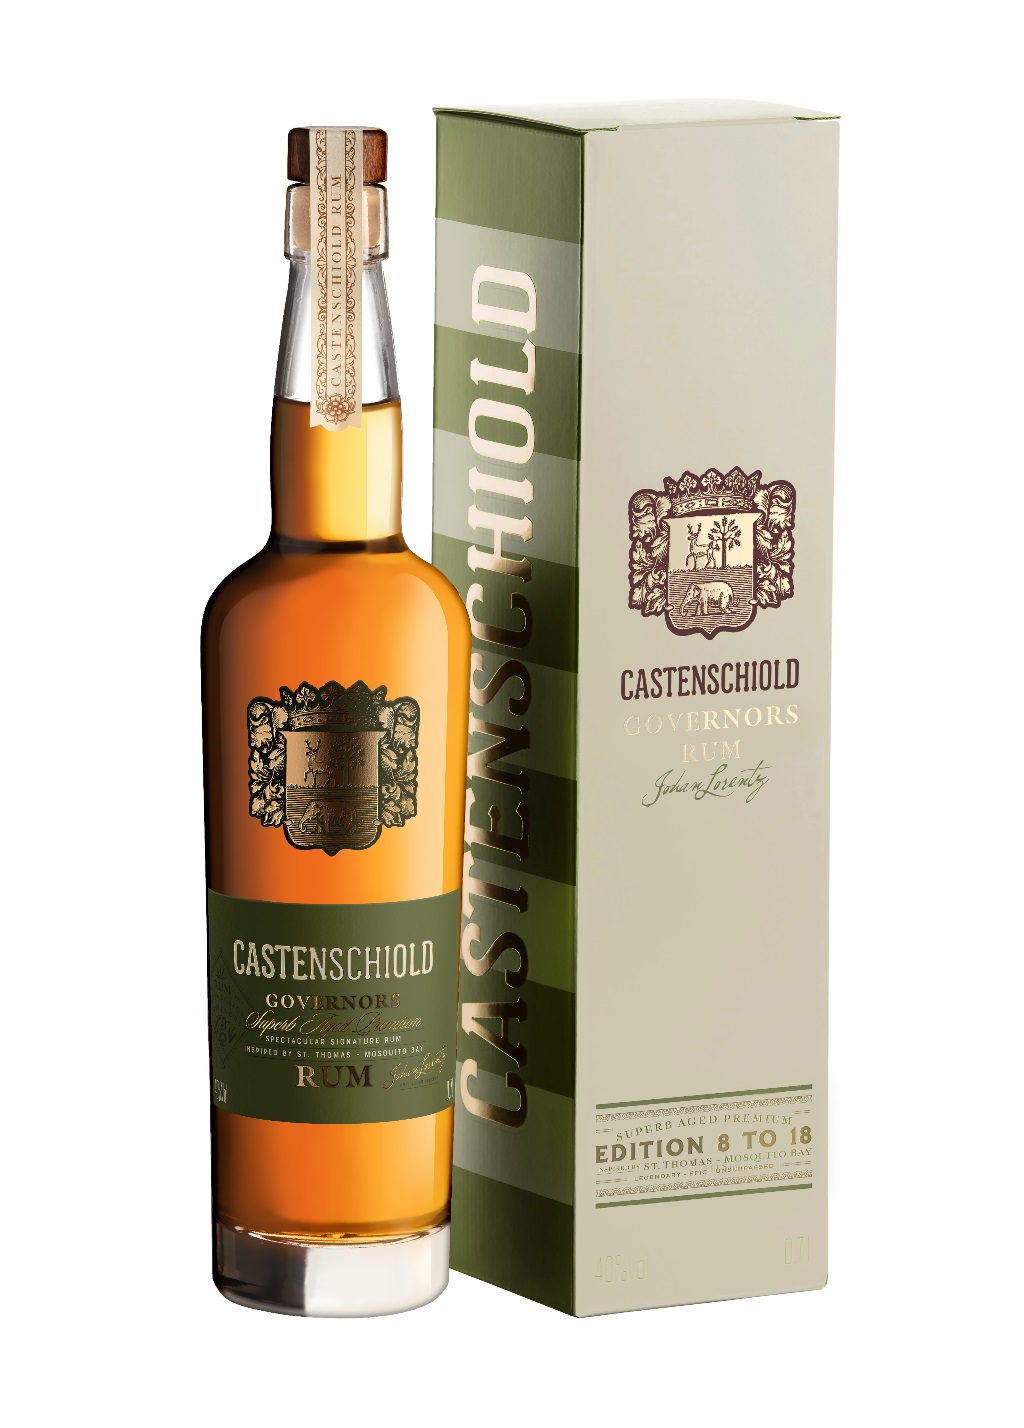 Castenschiold Governors Rum